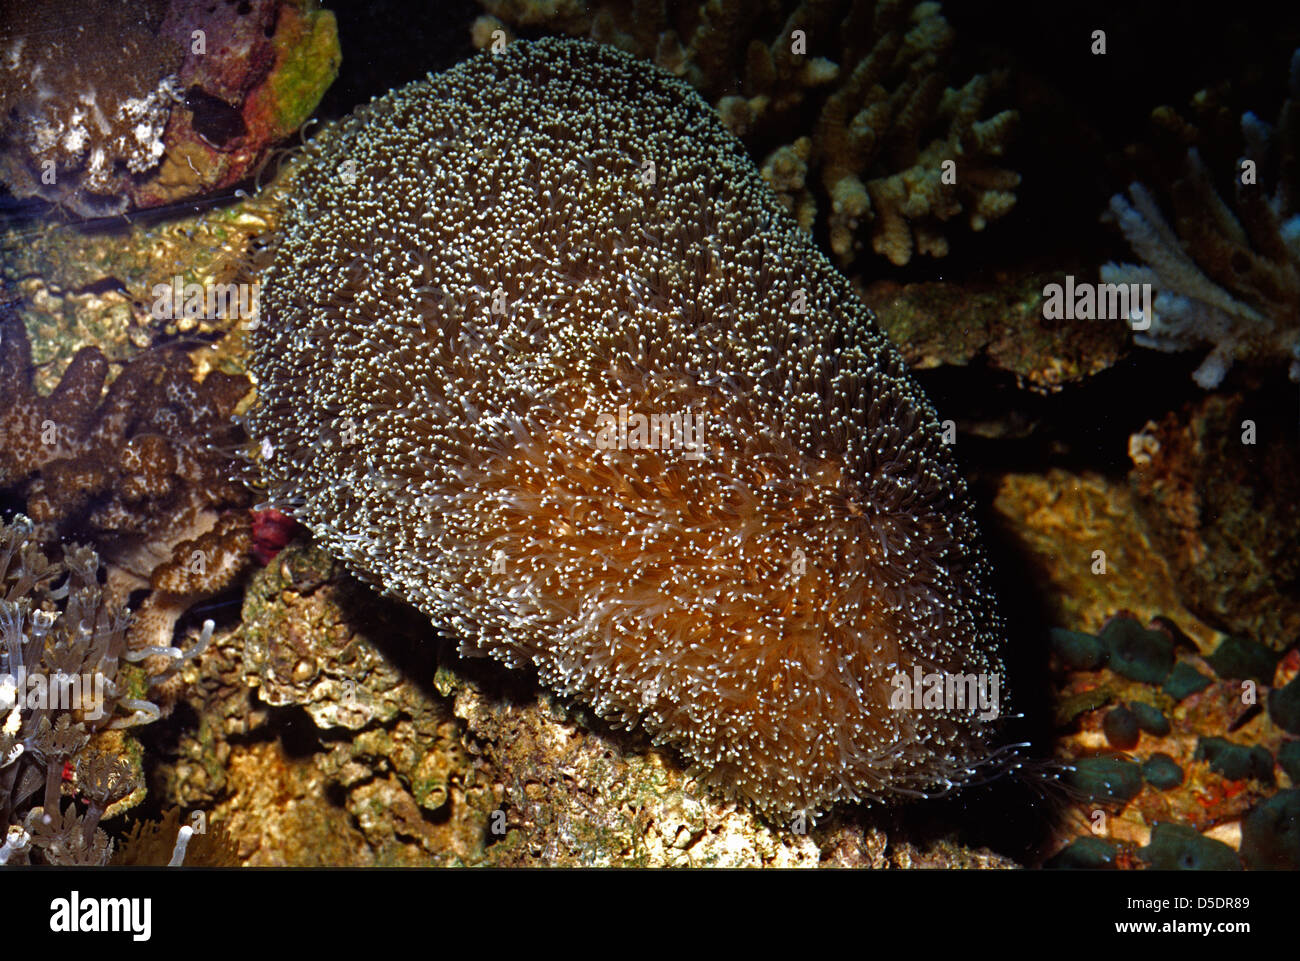 Galaxy coral Galaxea sp.Oculinidae, Indo-pacific ocean Stock Photo